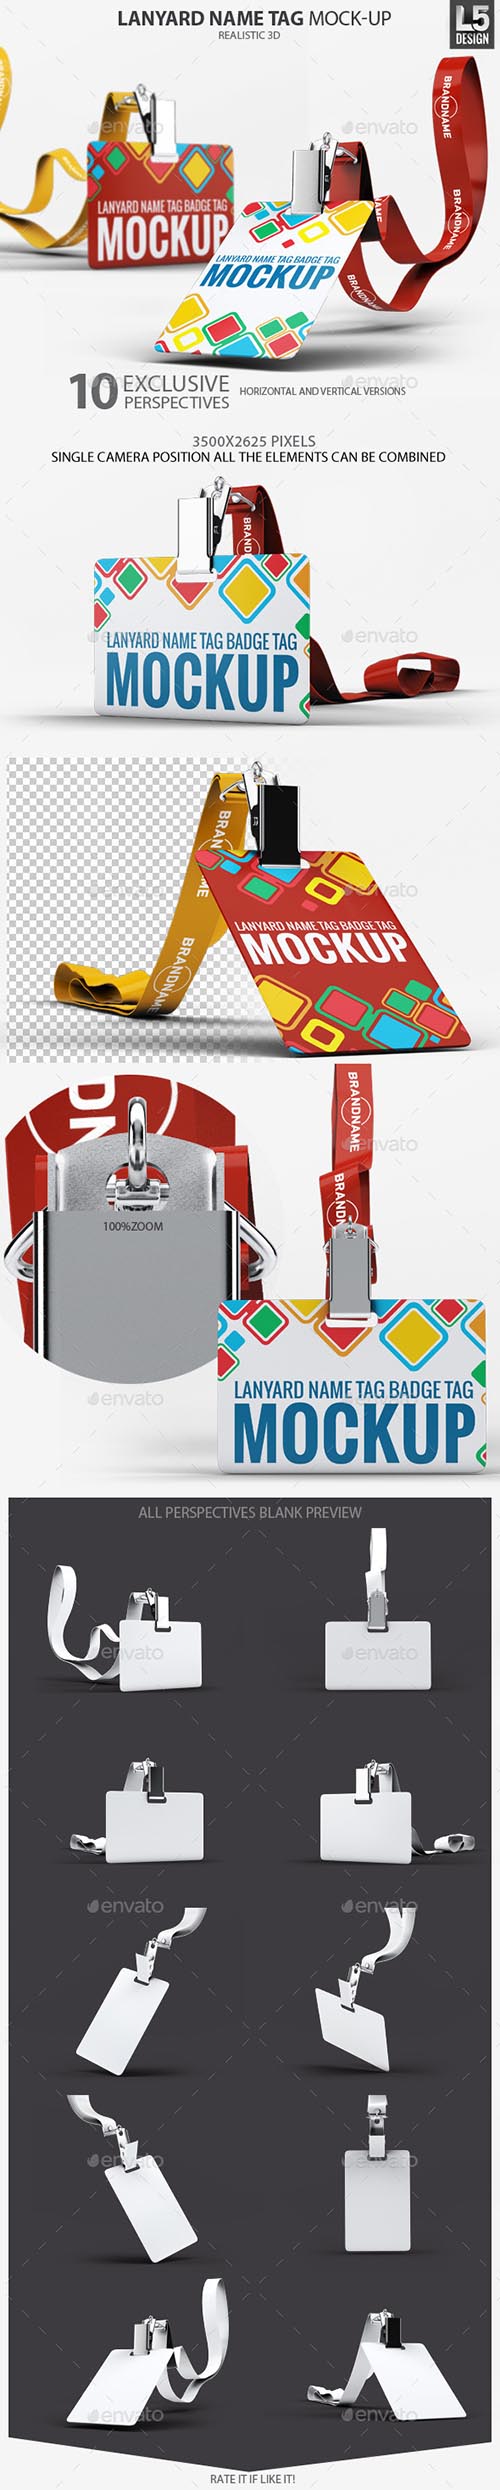 Lanyard Name Tag Badge Mockup - Graphicriver 10855578